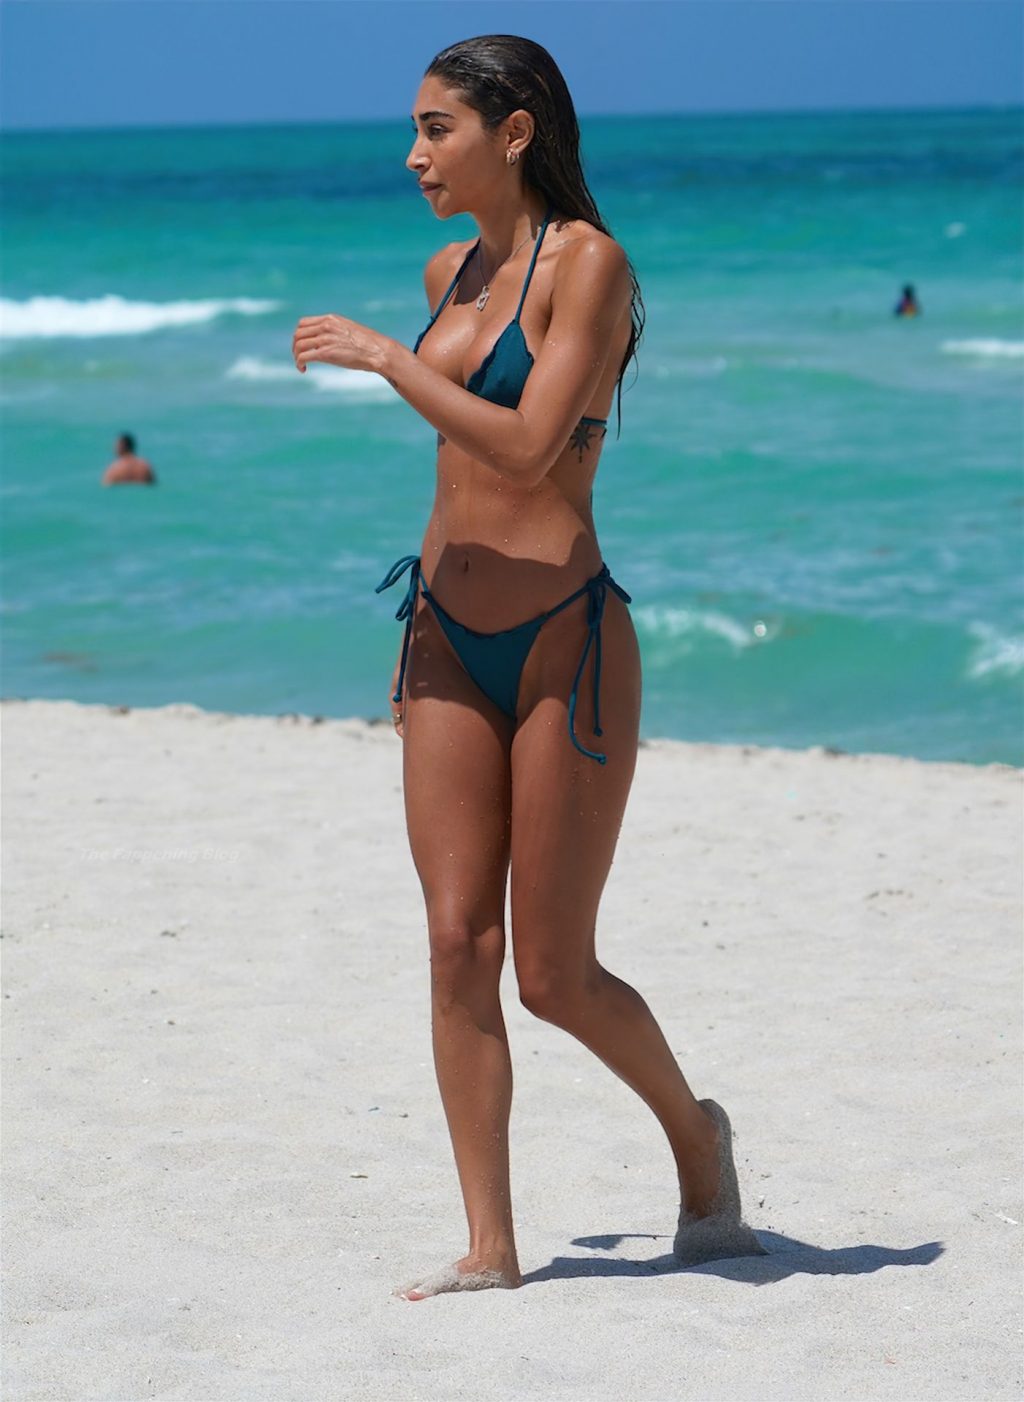 Chantel Jeffries Looks Amazing in a Green Bikini on the Beach in Miami (88 Photos)